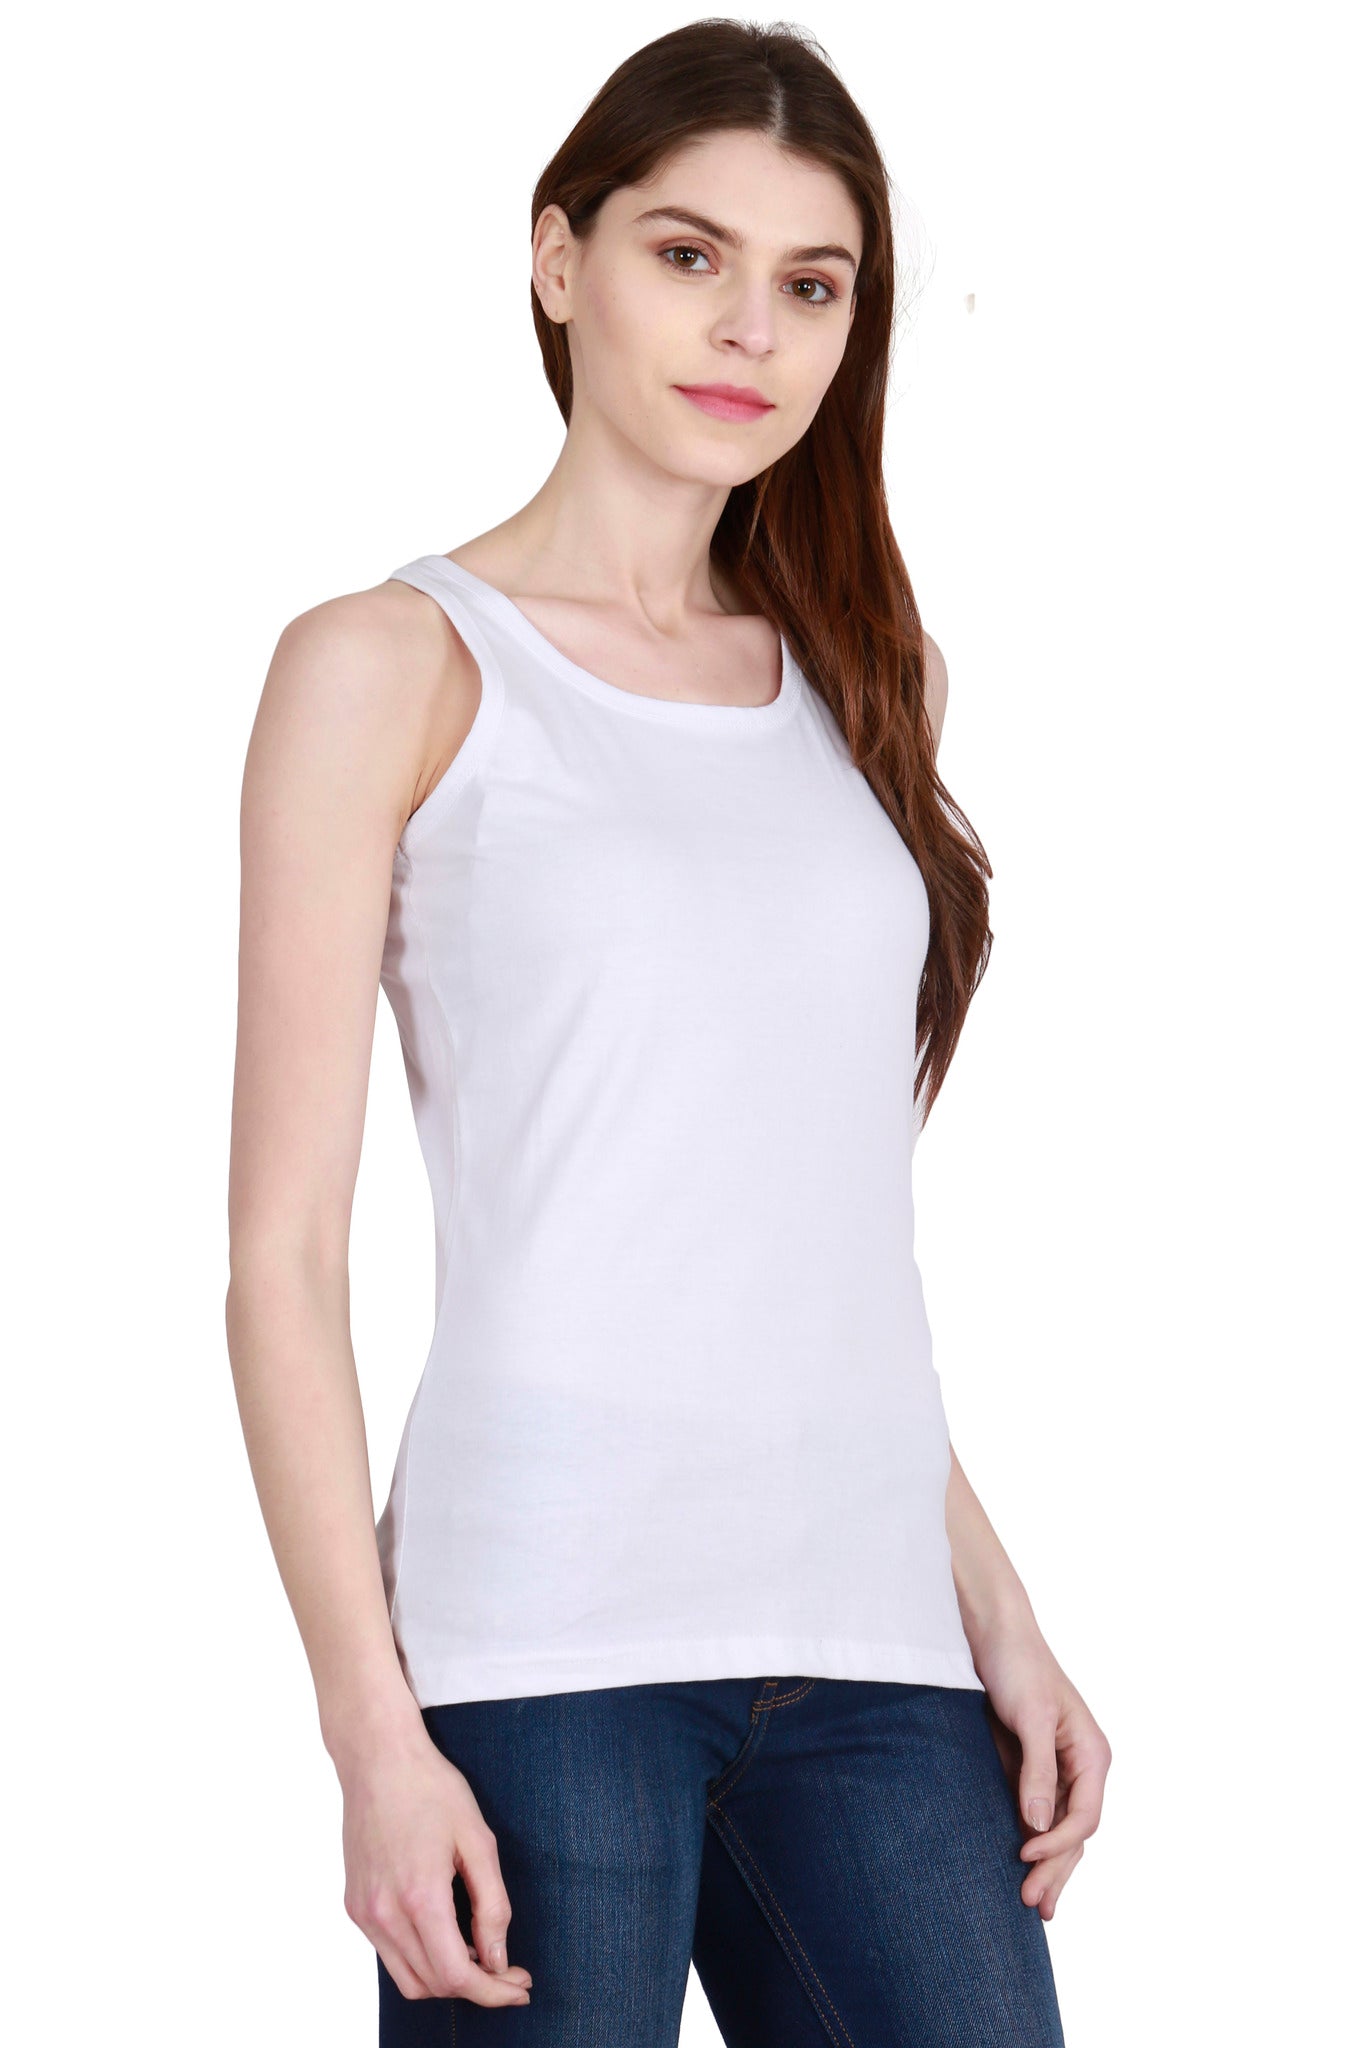 Women's Cotton Plain Sleeveless White Color Top